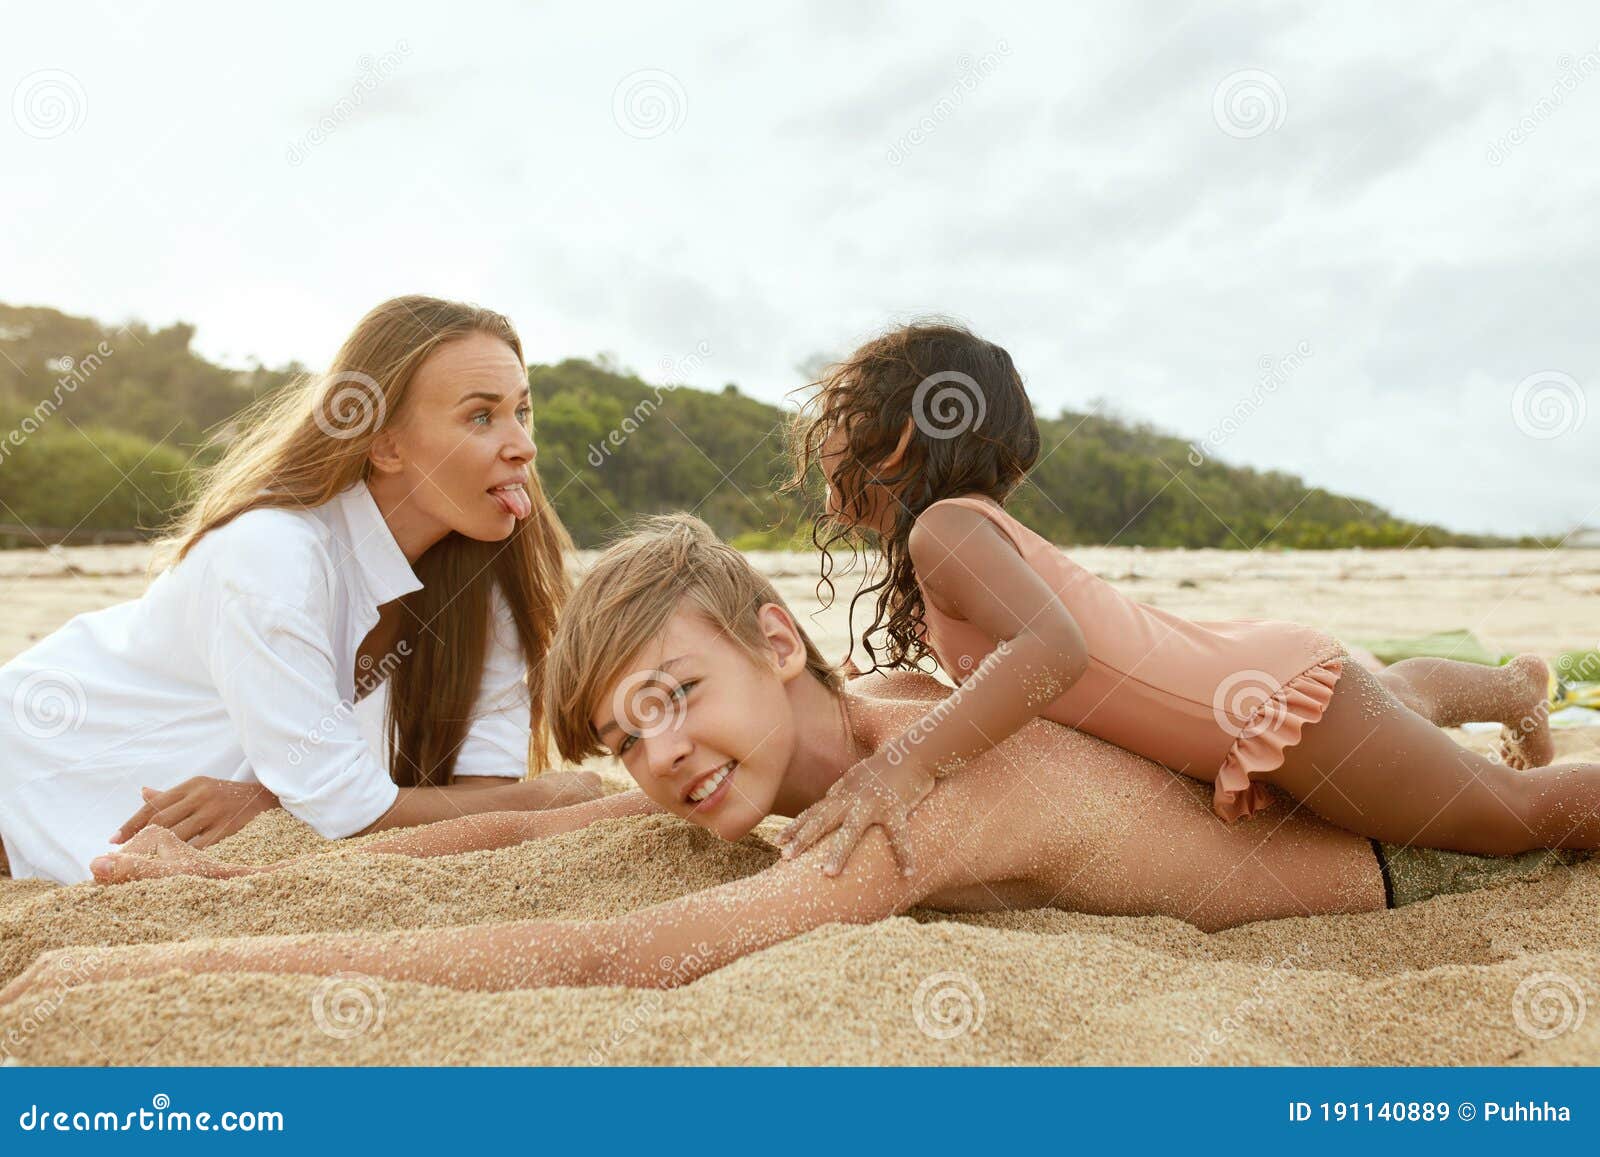 Sister On Nude Beach porno blowjob